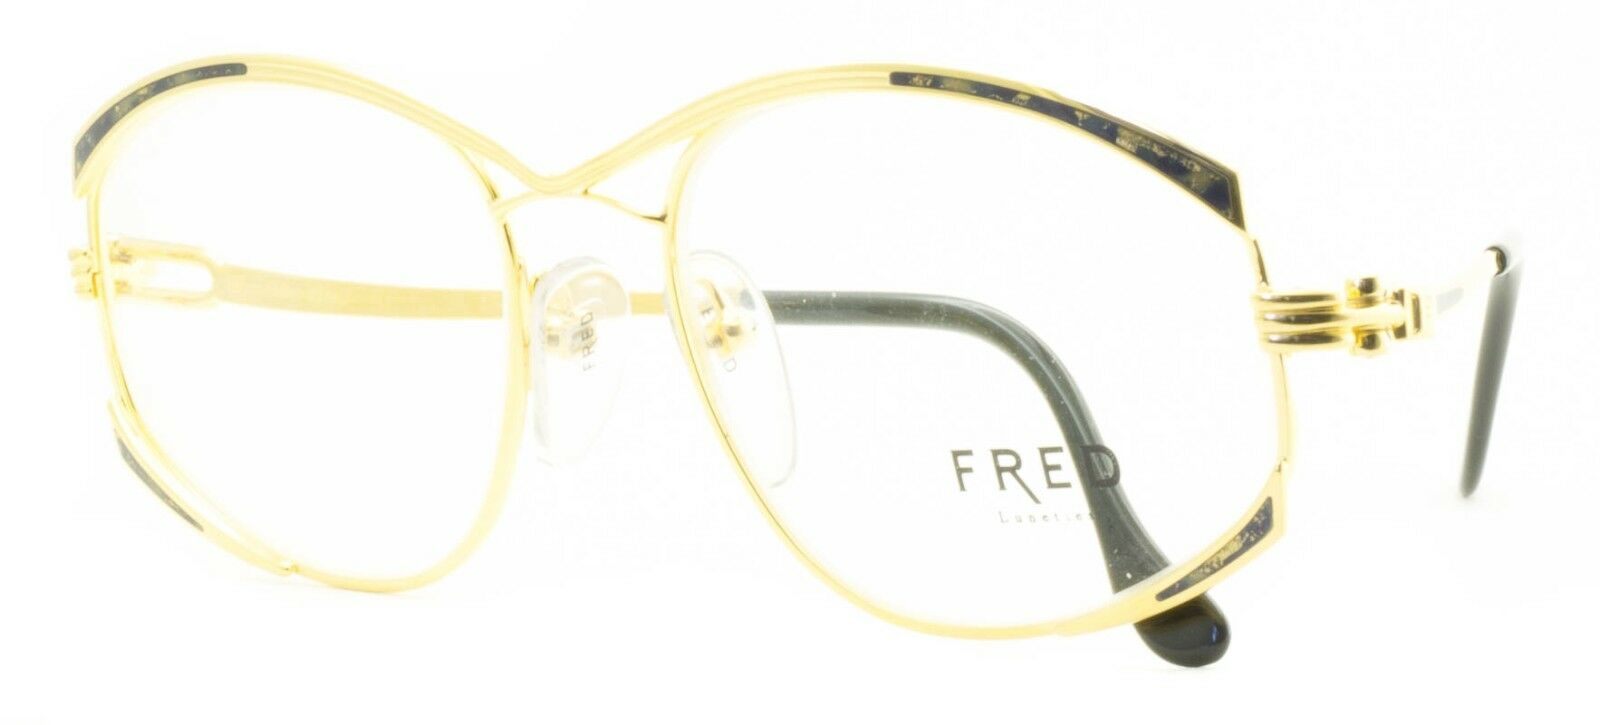 Luxury jewelry and eyewear - Fred Paris